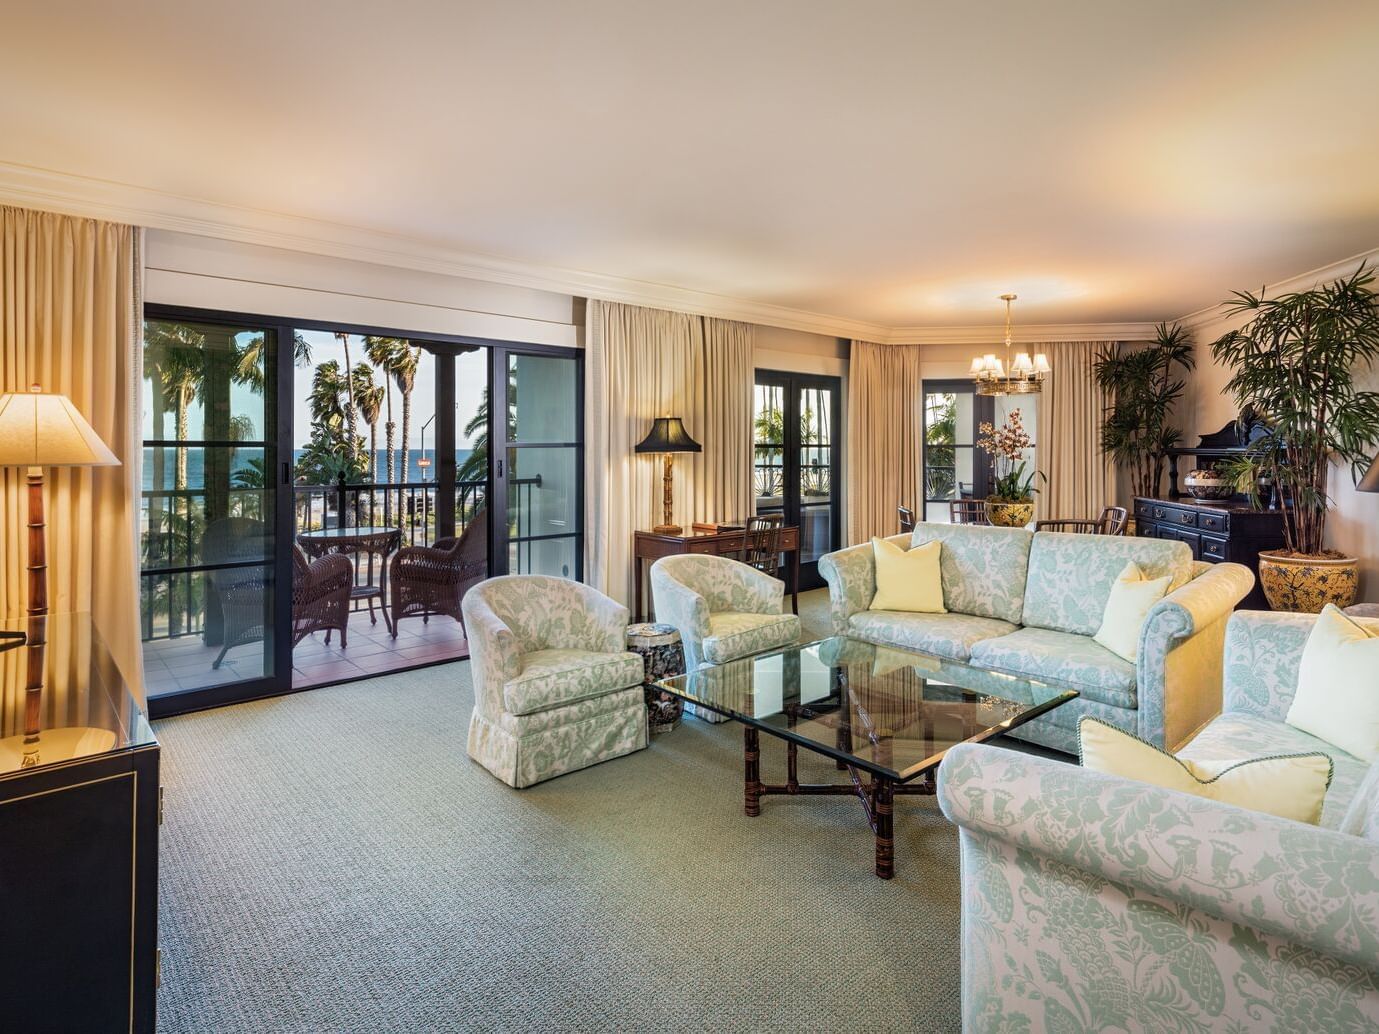 Living room & lounge area of Anacapa suite at Santa Barbara Inn